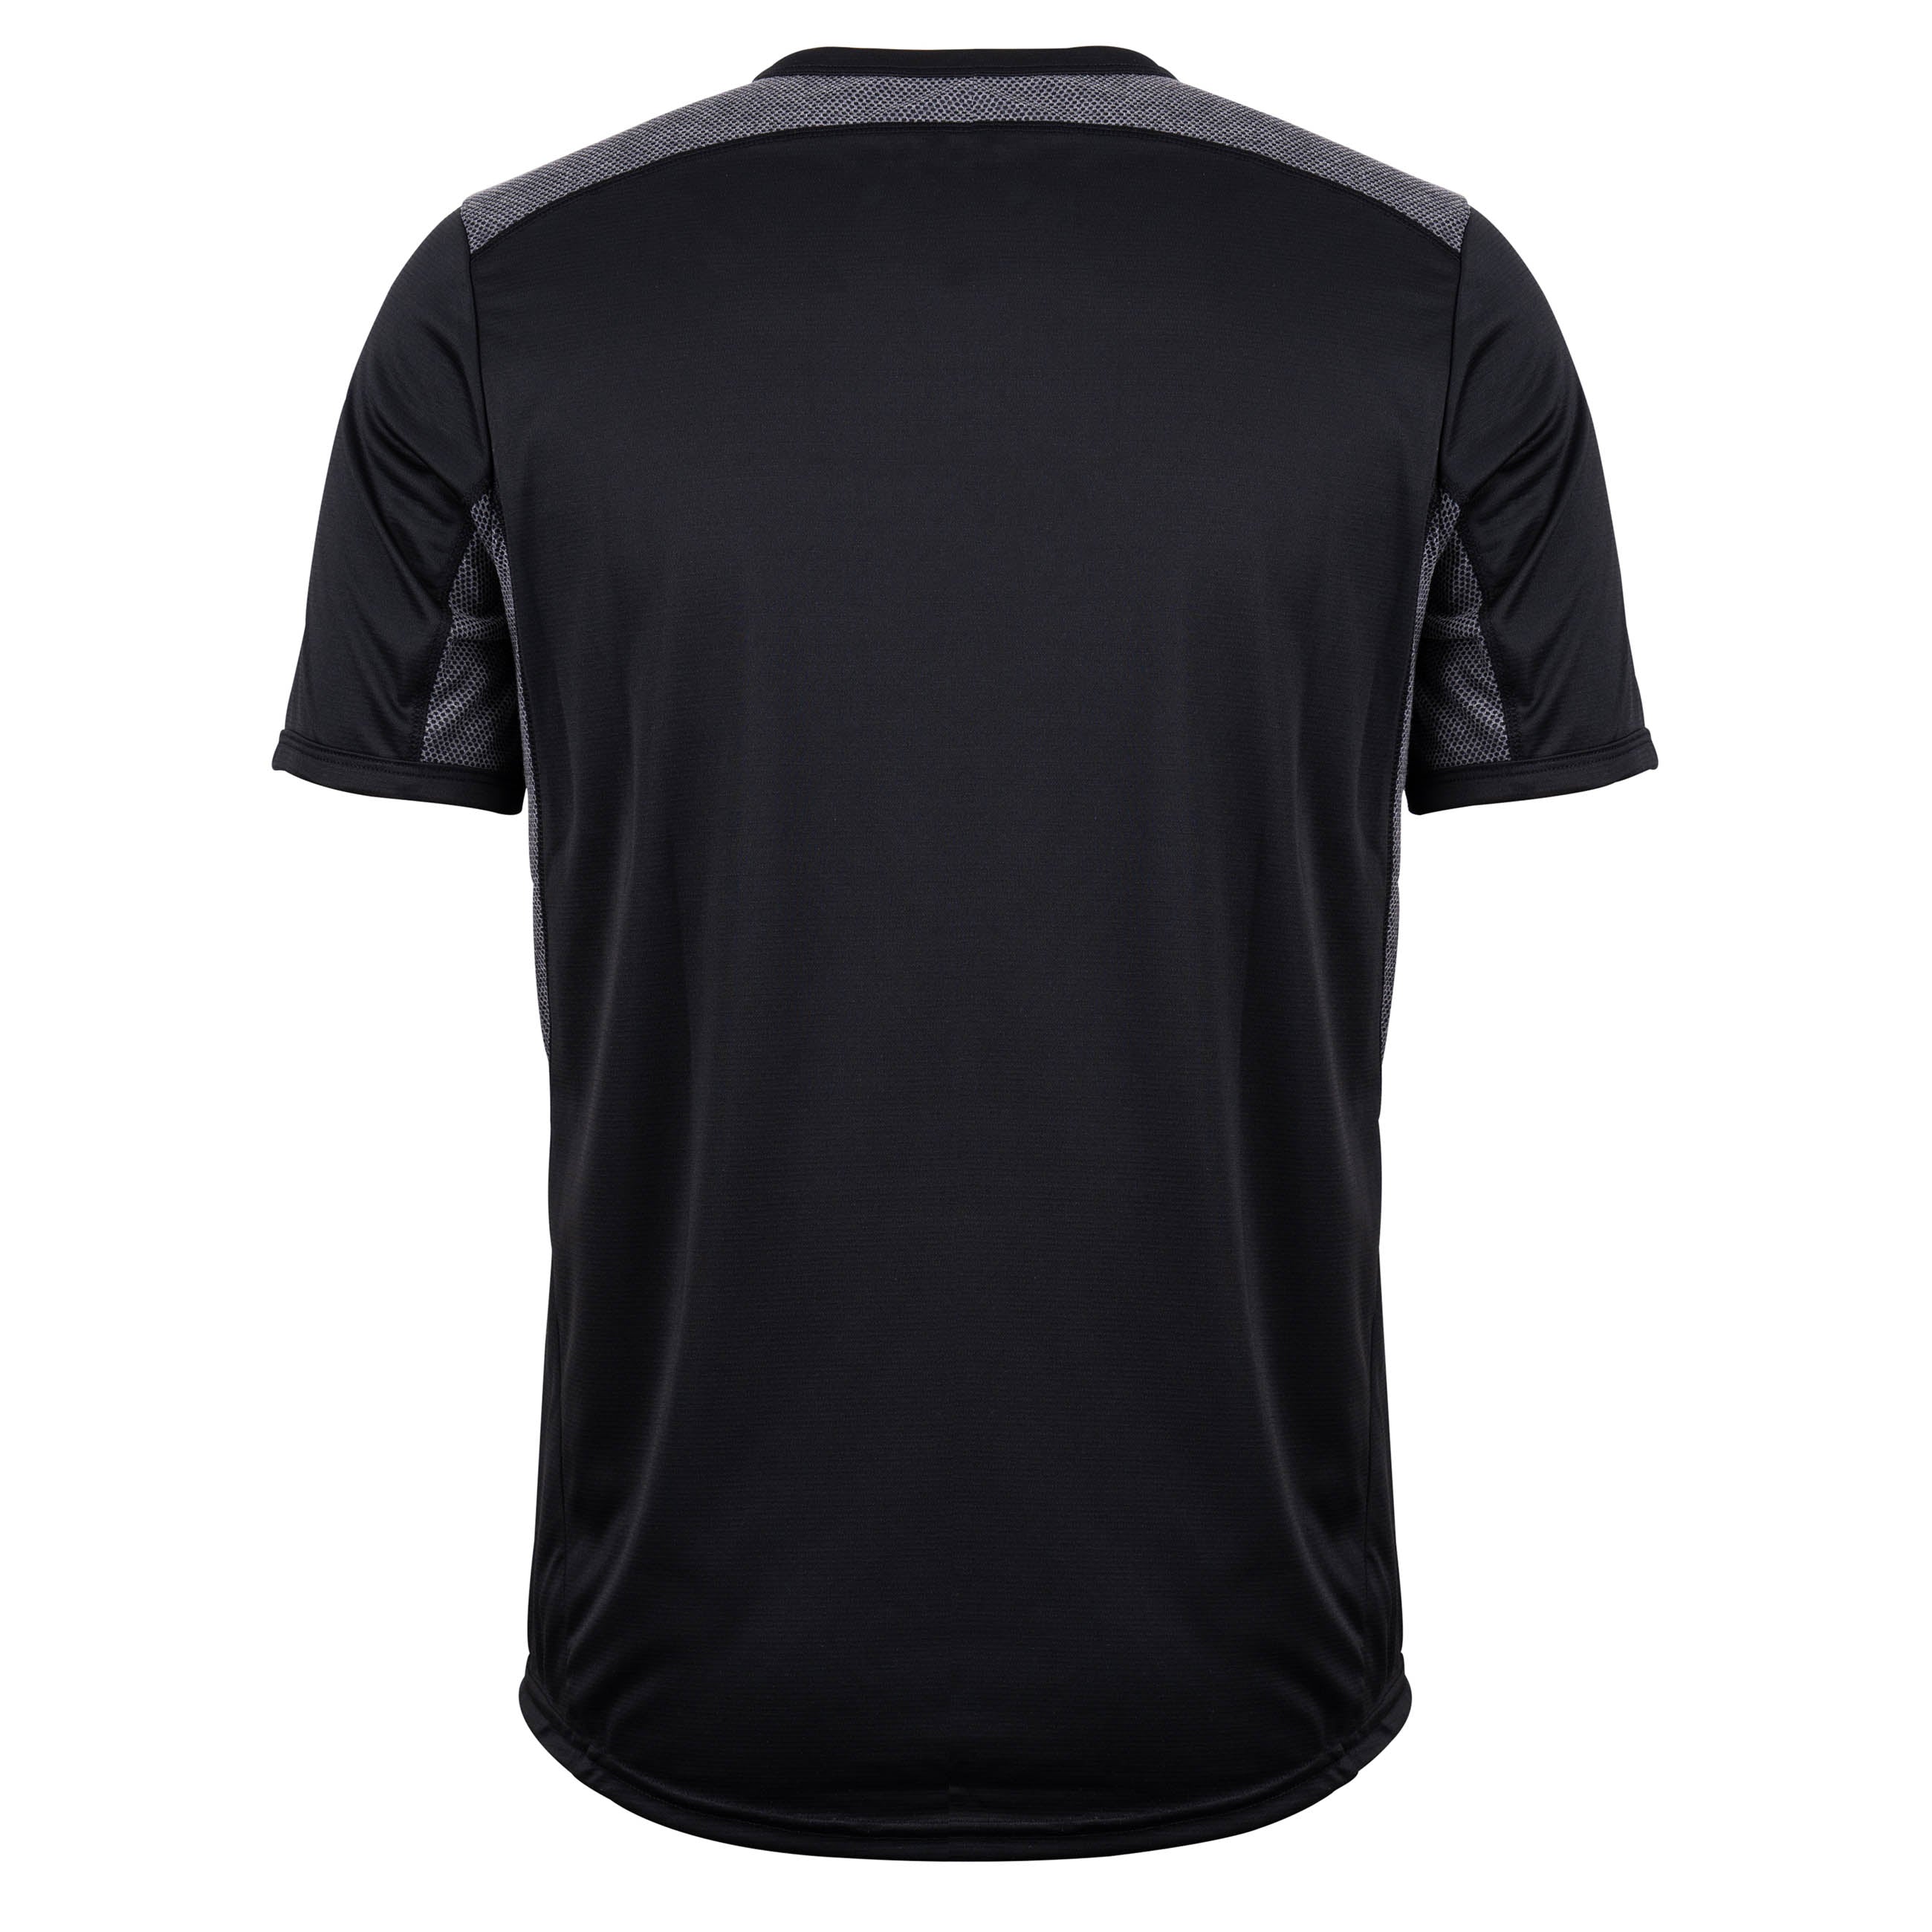 Pro Performance Short Sleeve Men's T-Shirt